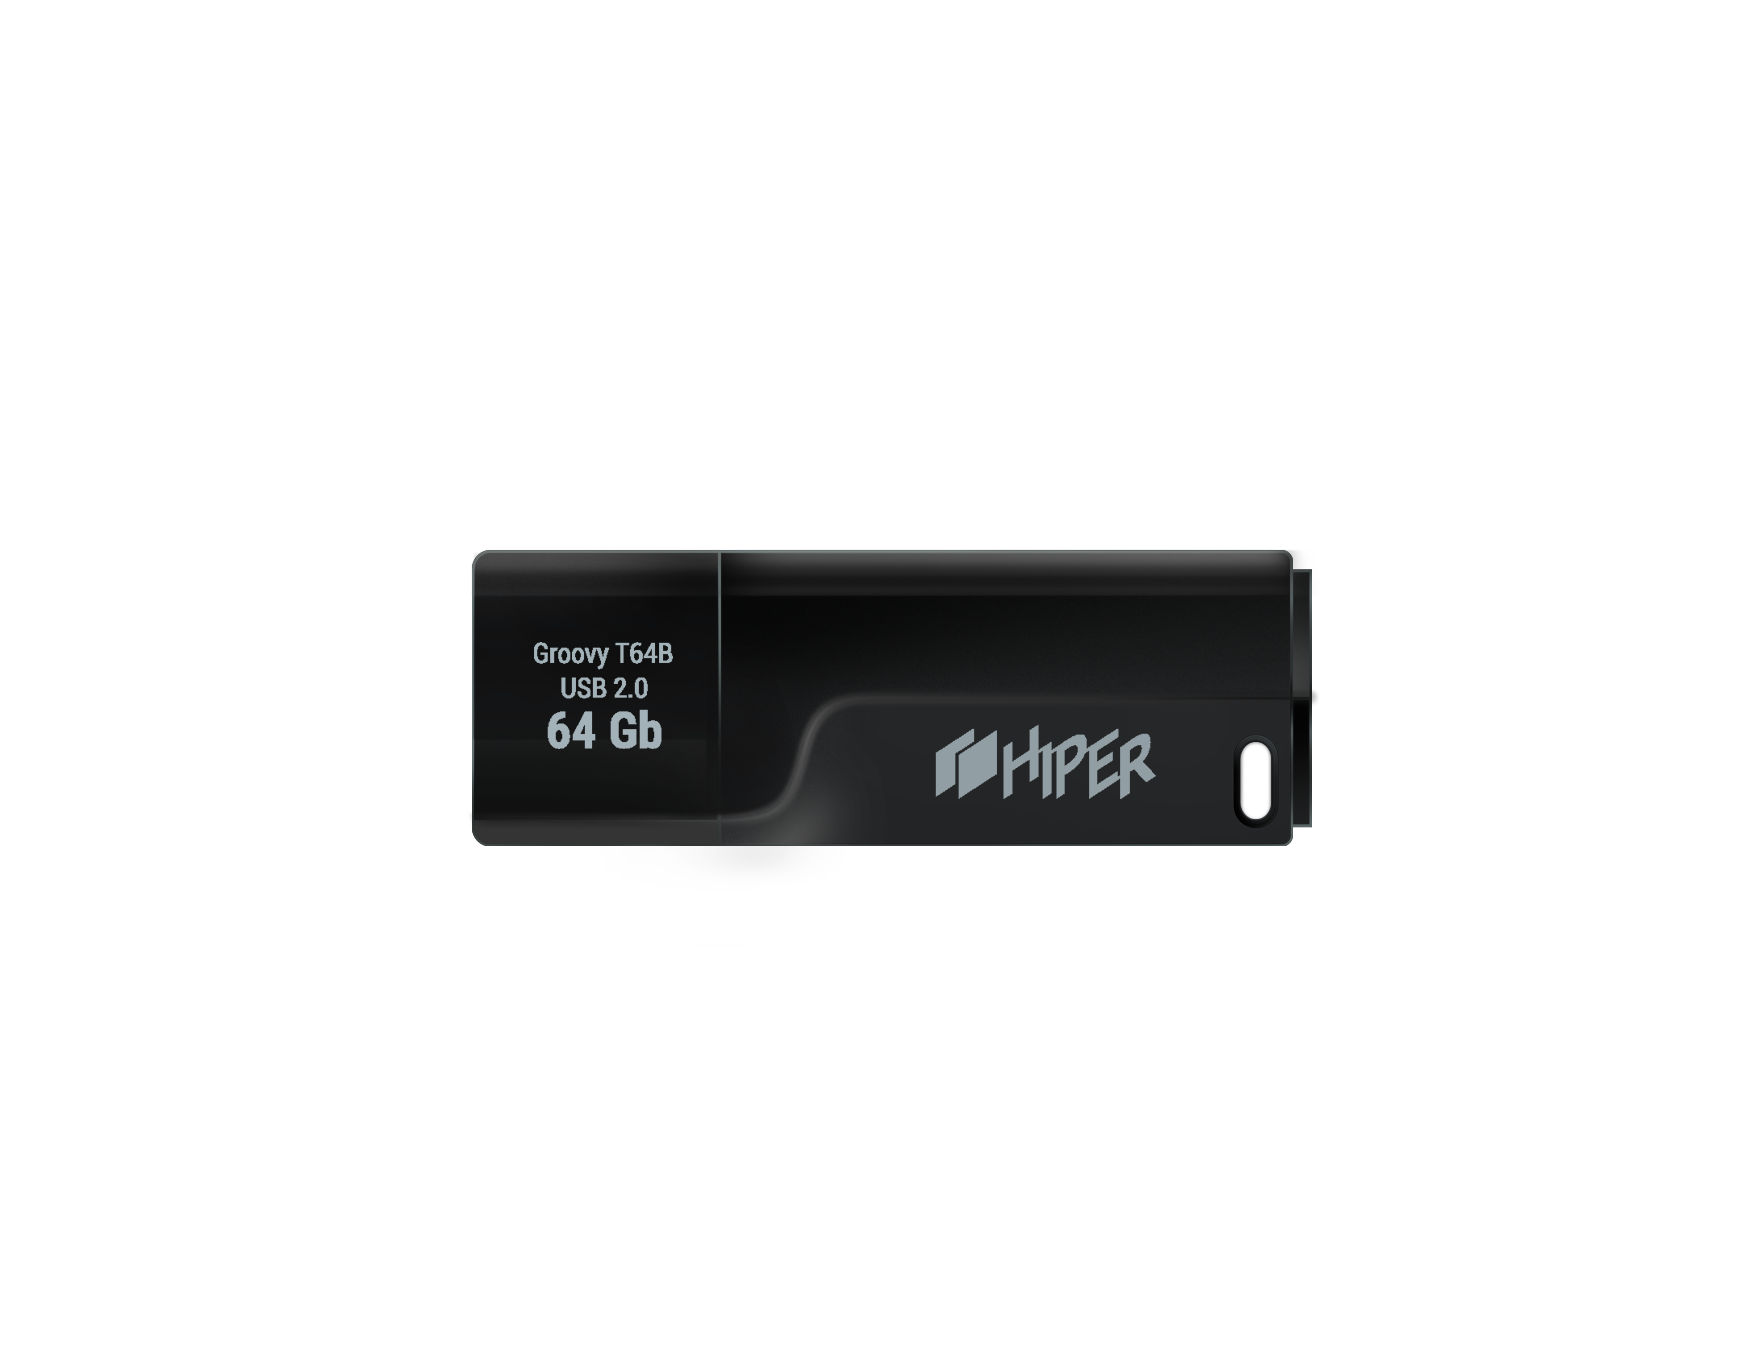 Флешка 64Gb USB 2.0 Hiper Groovy T64B, черный (HI-USB264GBTB)